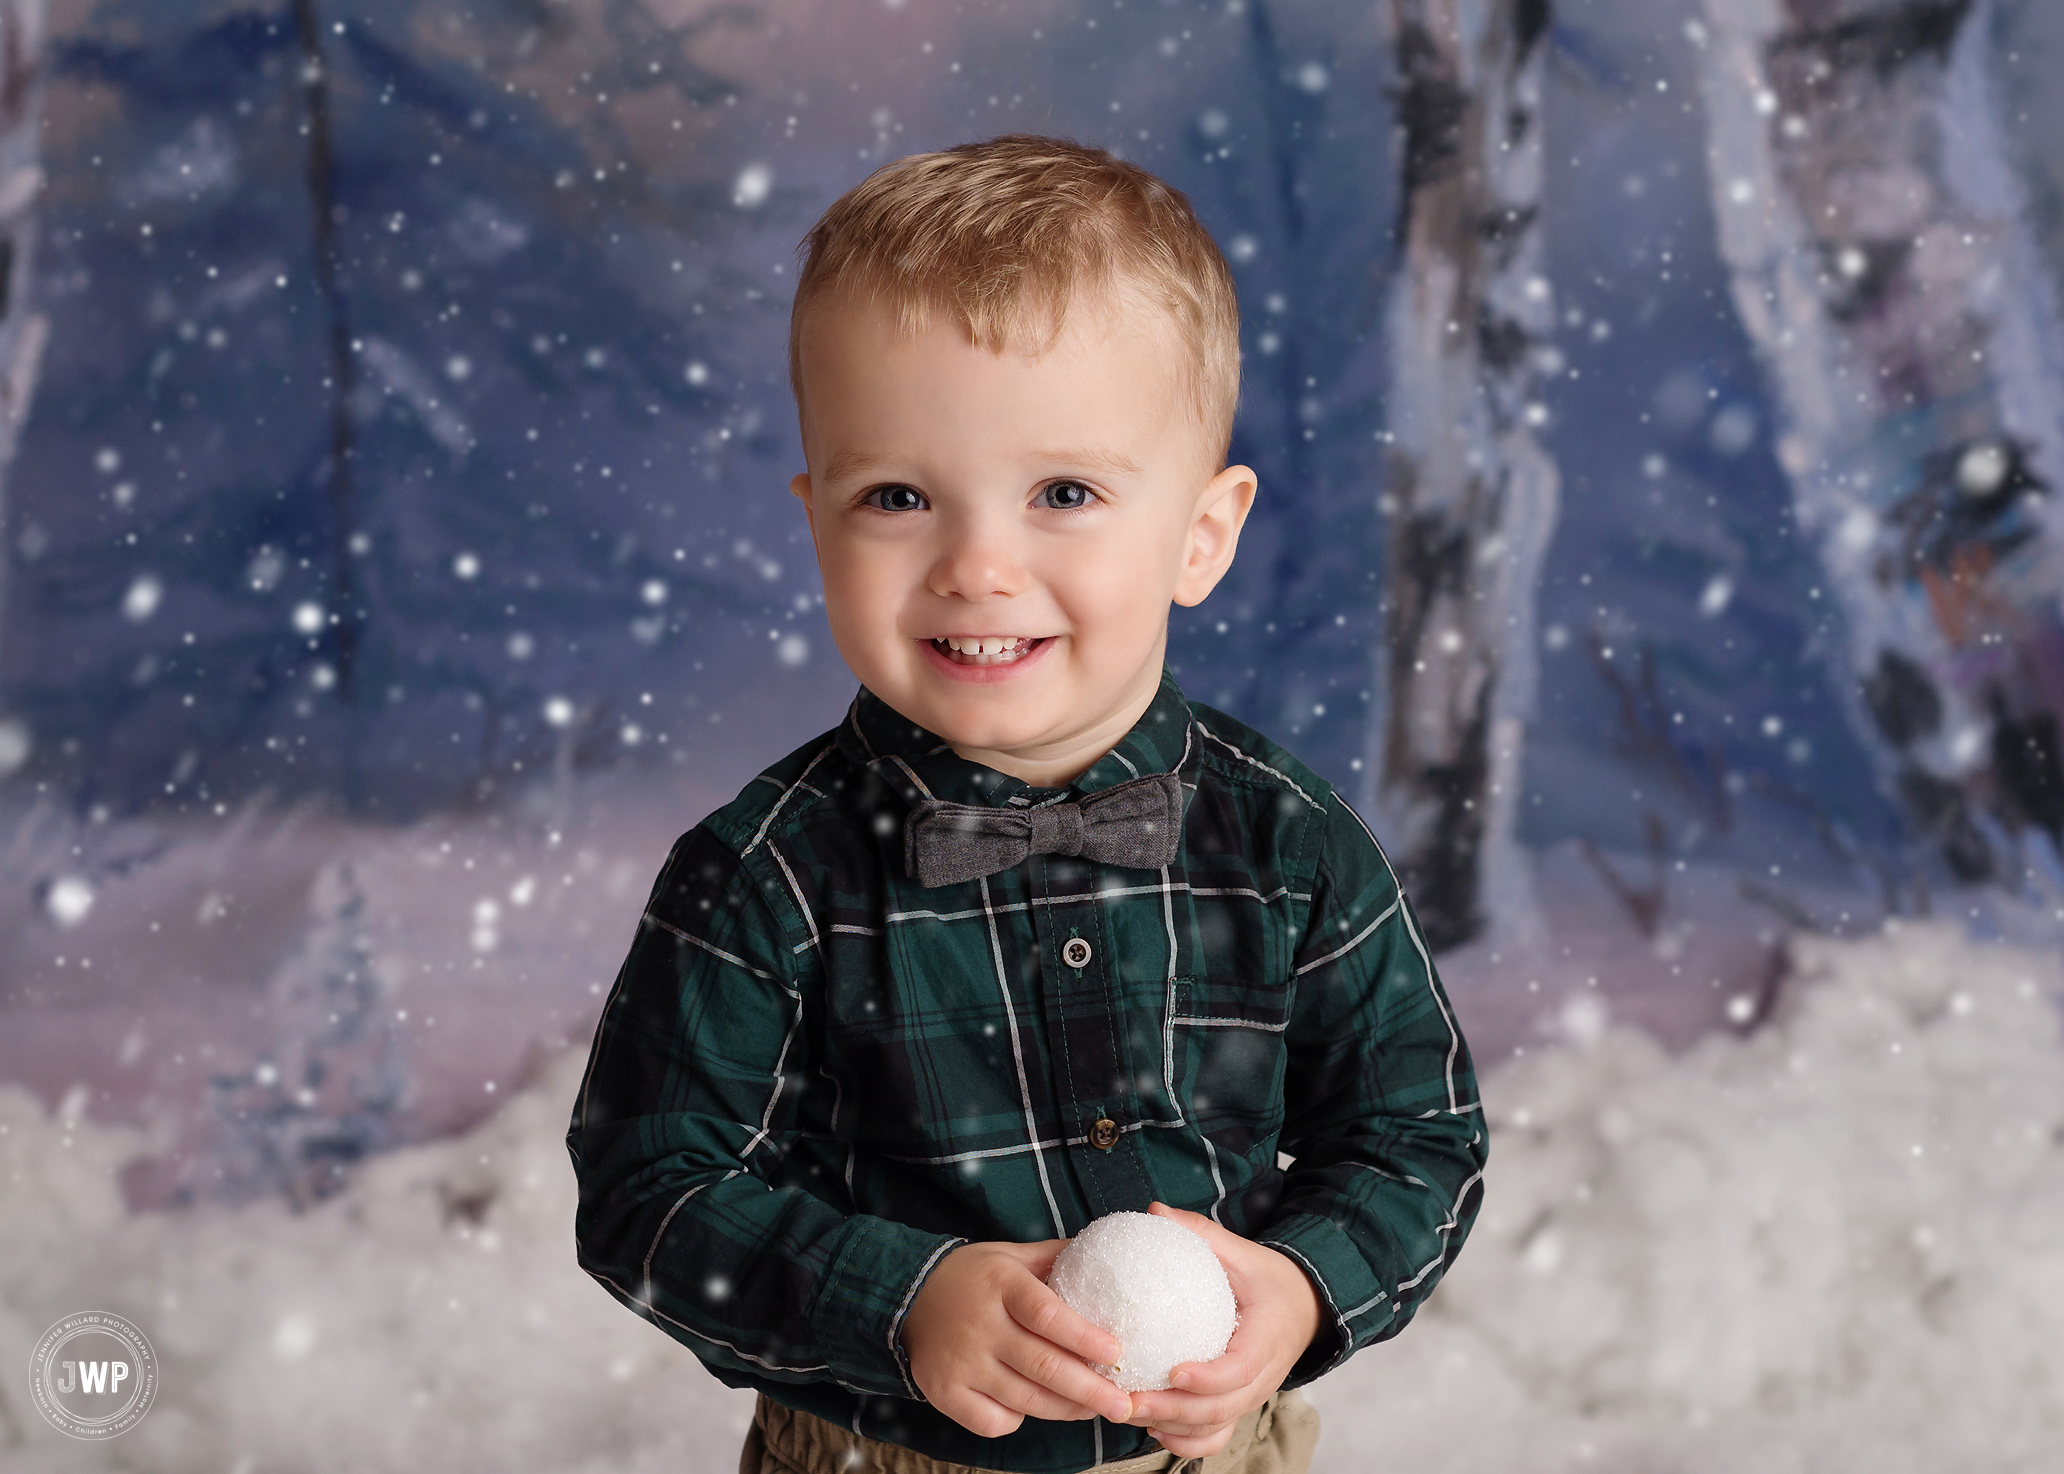 little boy green shirt snow Winter scene snowballs Kingston children photography